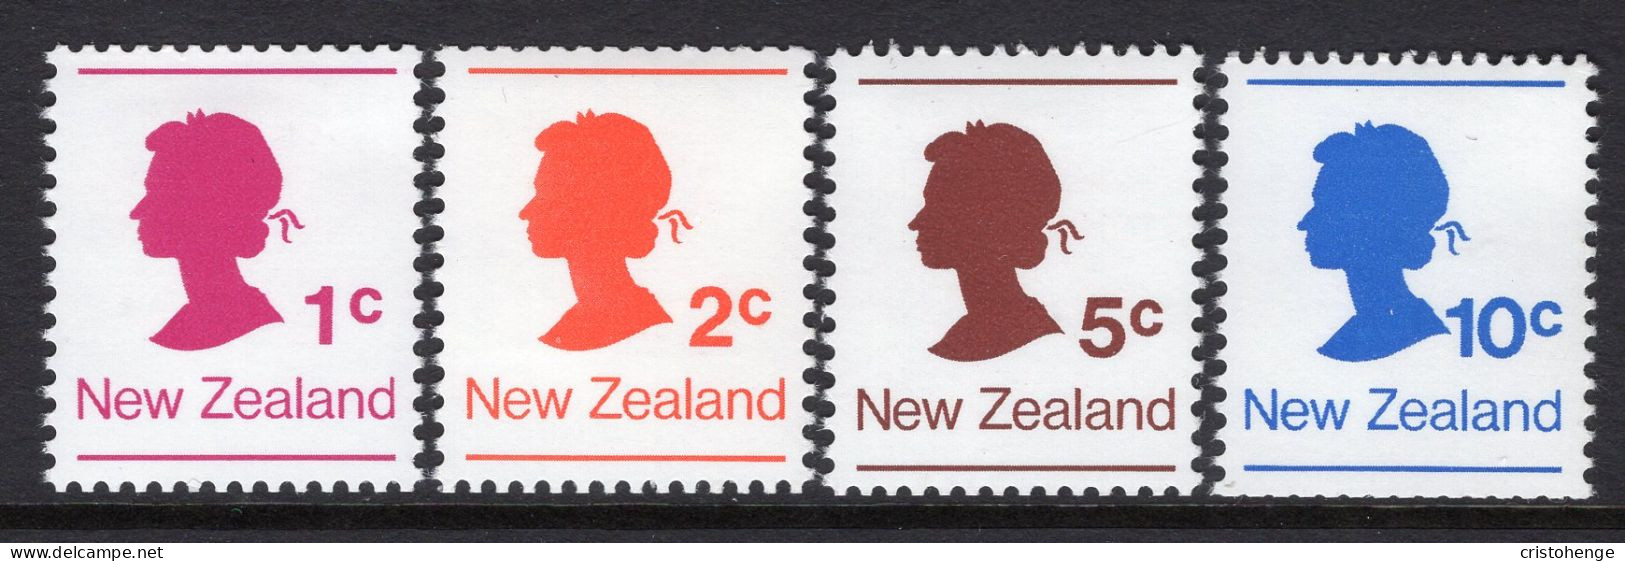 New Zealand 1978 QEII Coils Set HM (SG 1170-1173) - Unused Stamps